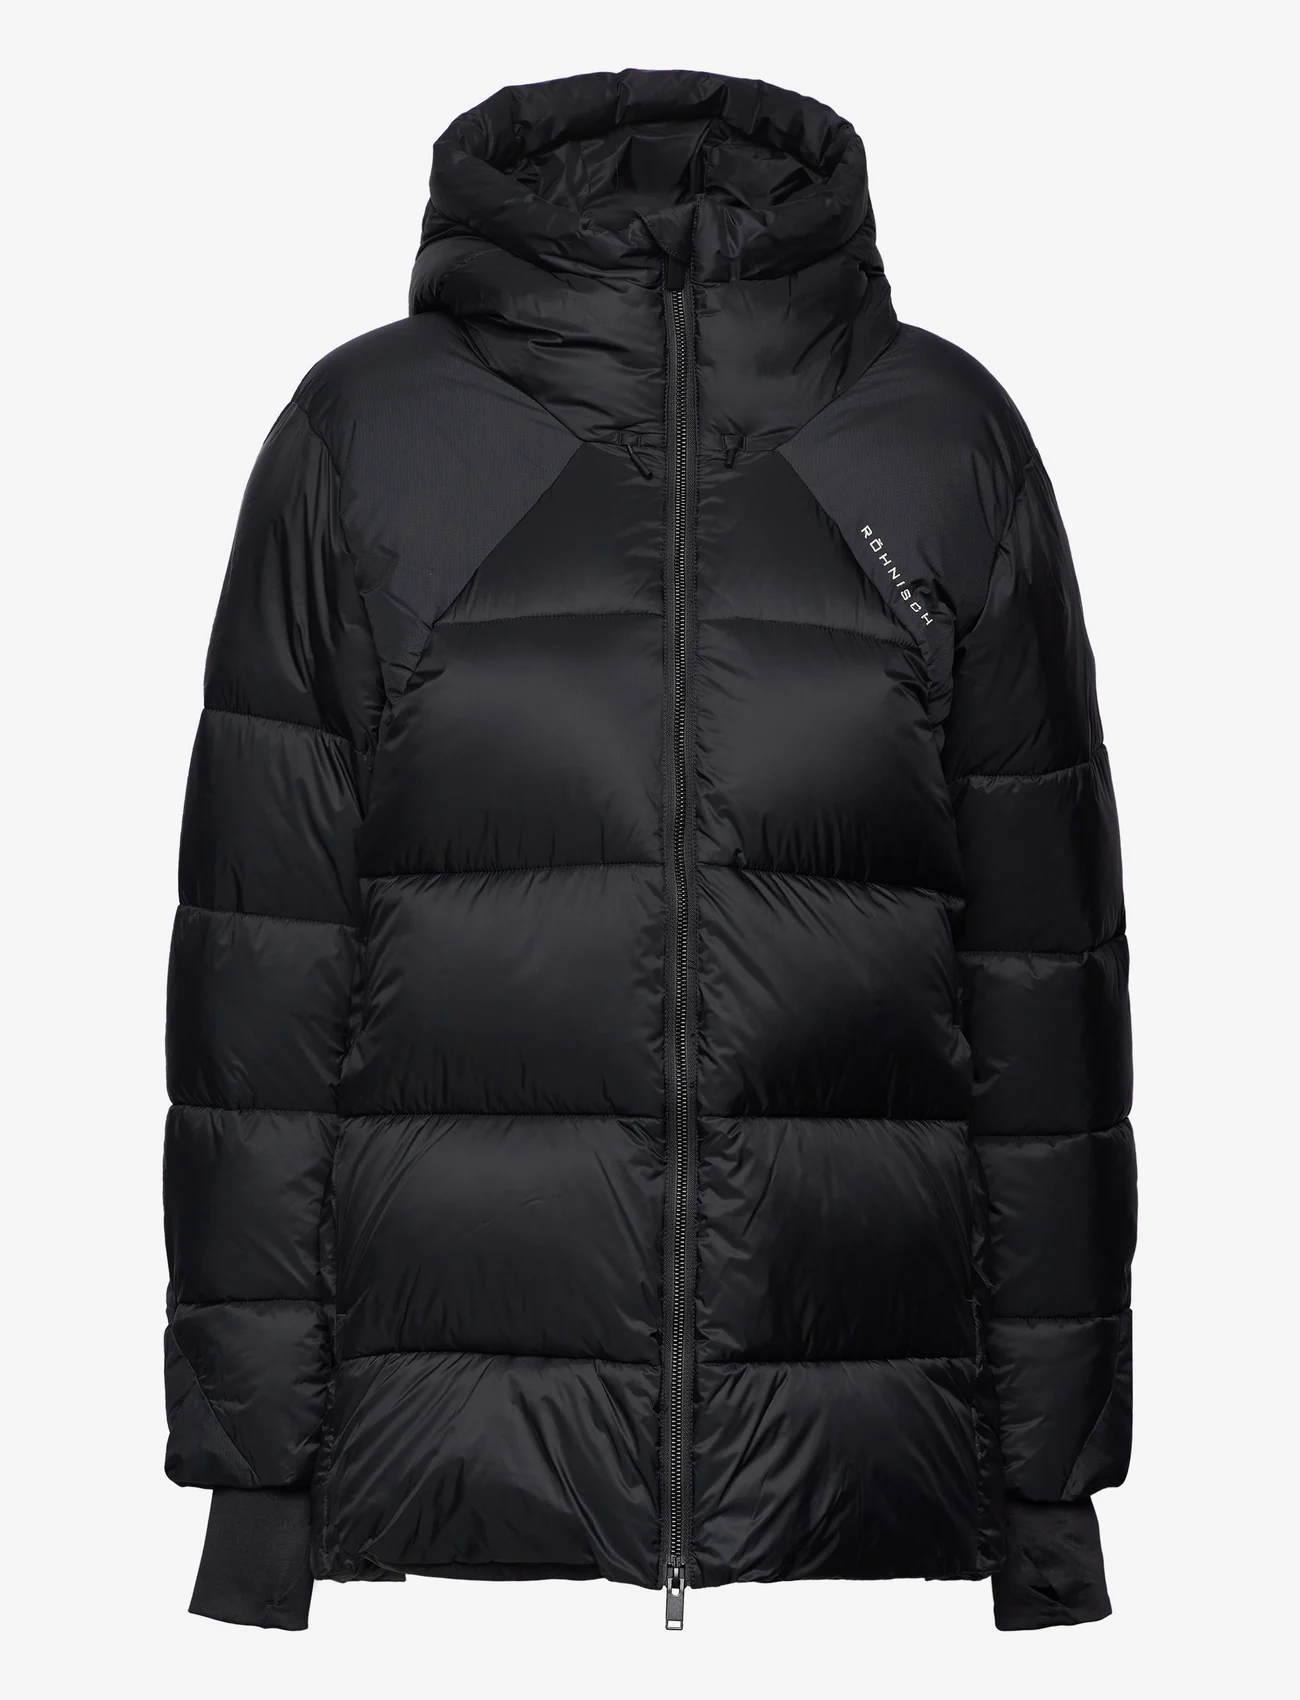 Röhnisch - Saint Puffer Jacket - down- & padded jackets - black - 0